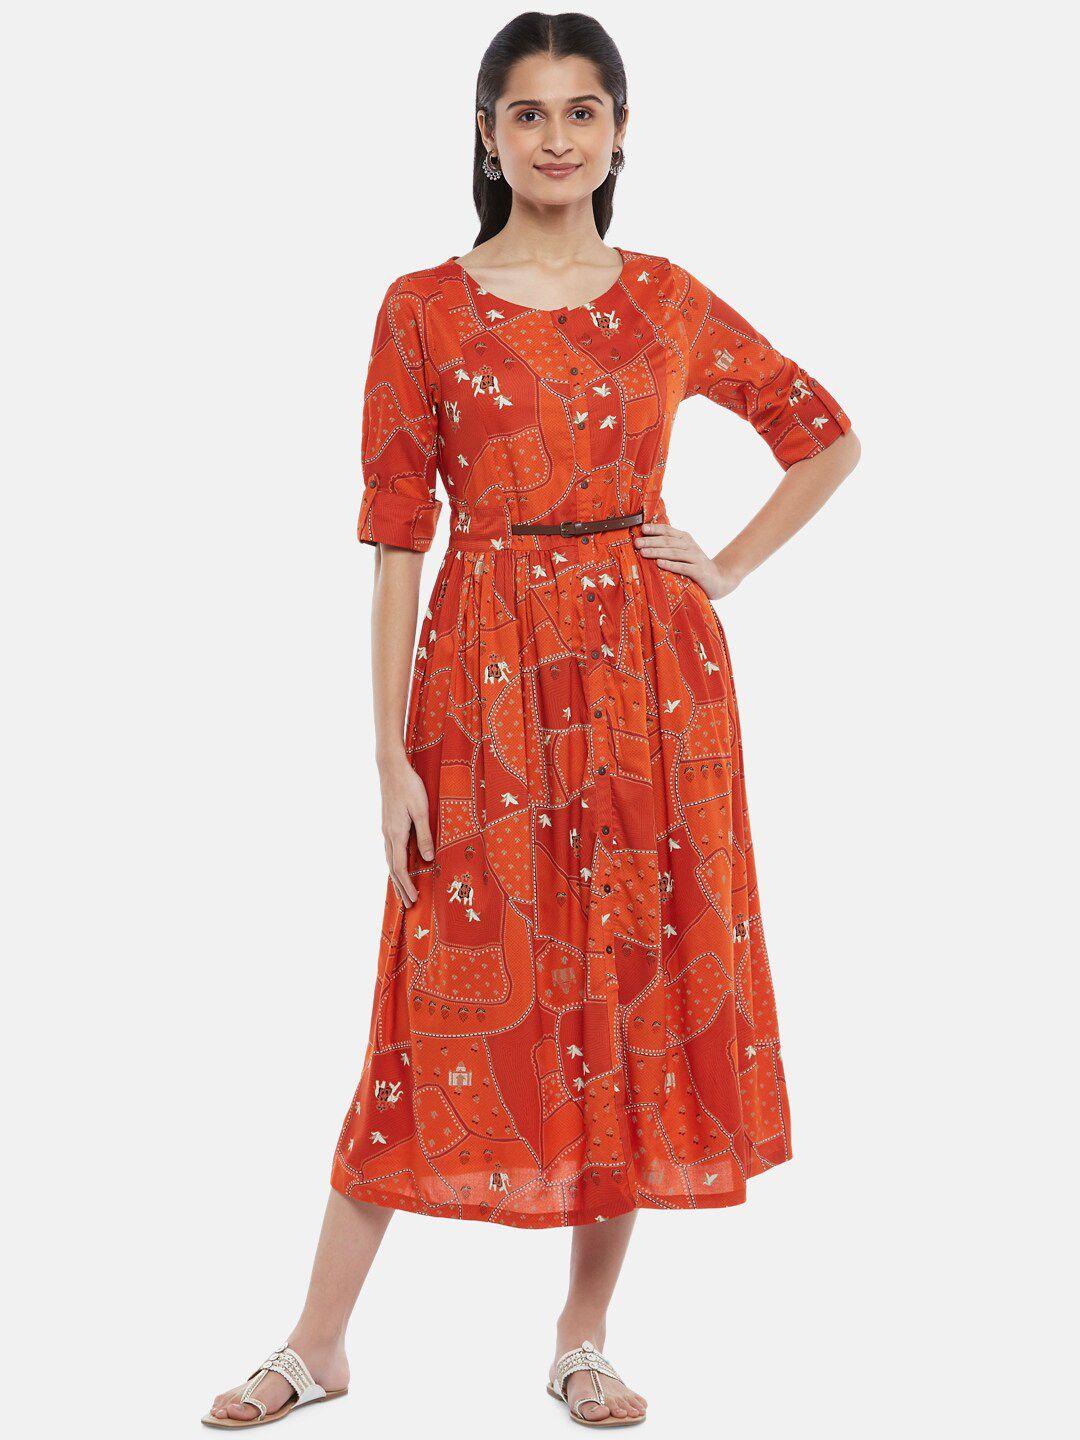 akkriti by pantaloons rust floral ethnic a-line midi dress